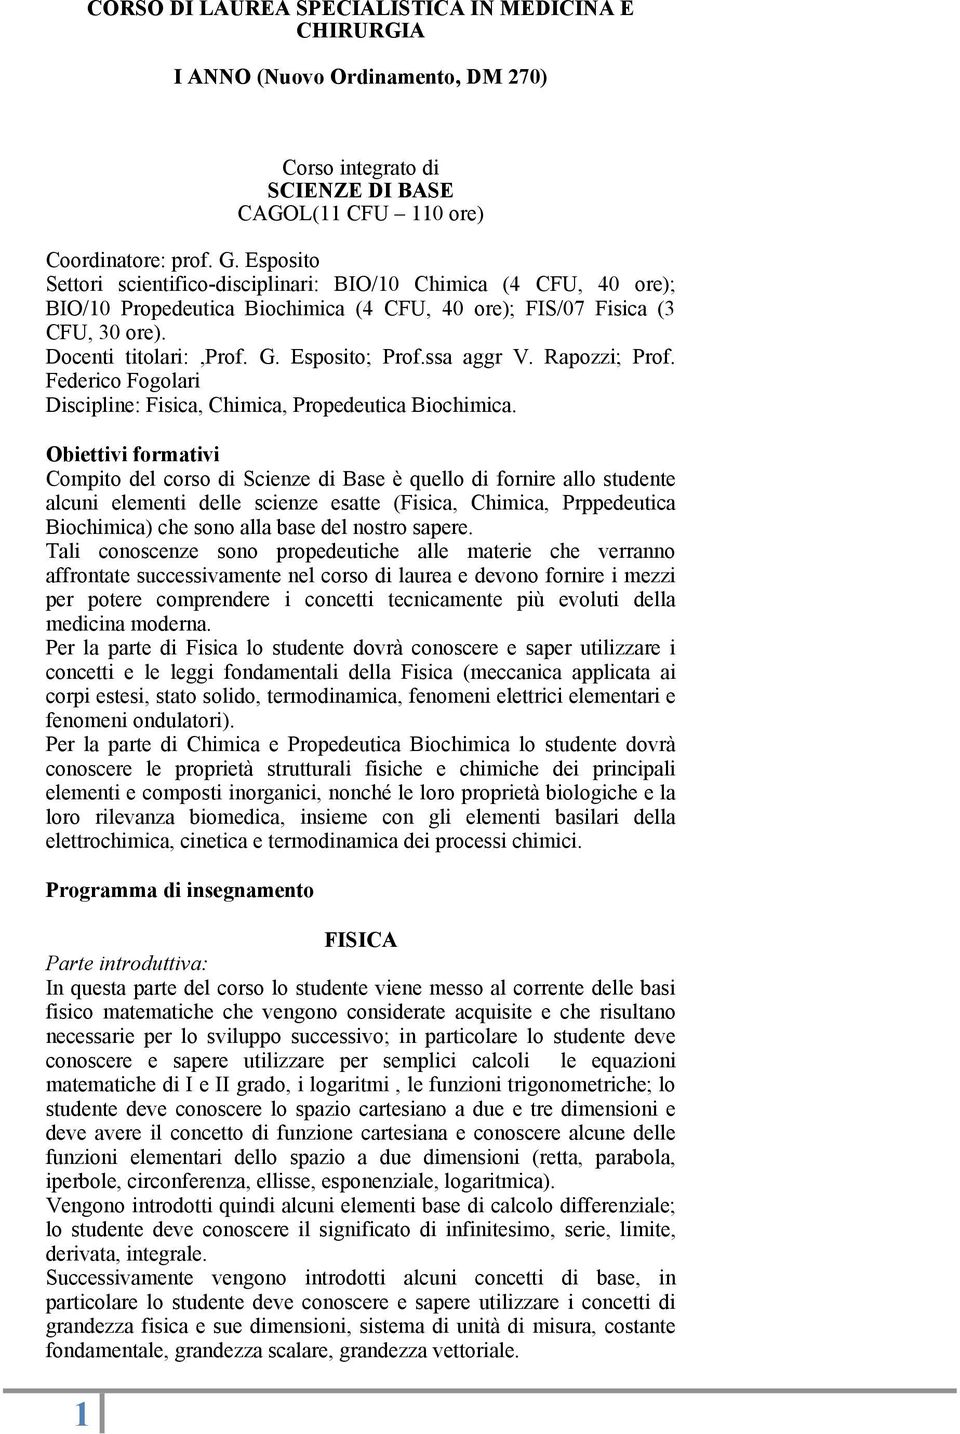 ssa aggr V. Rapozzi; Prof. Federico Fogolari Discipline: Fisica, Chimica, Propedeutica Biochimica.